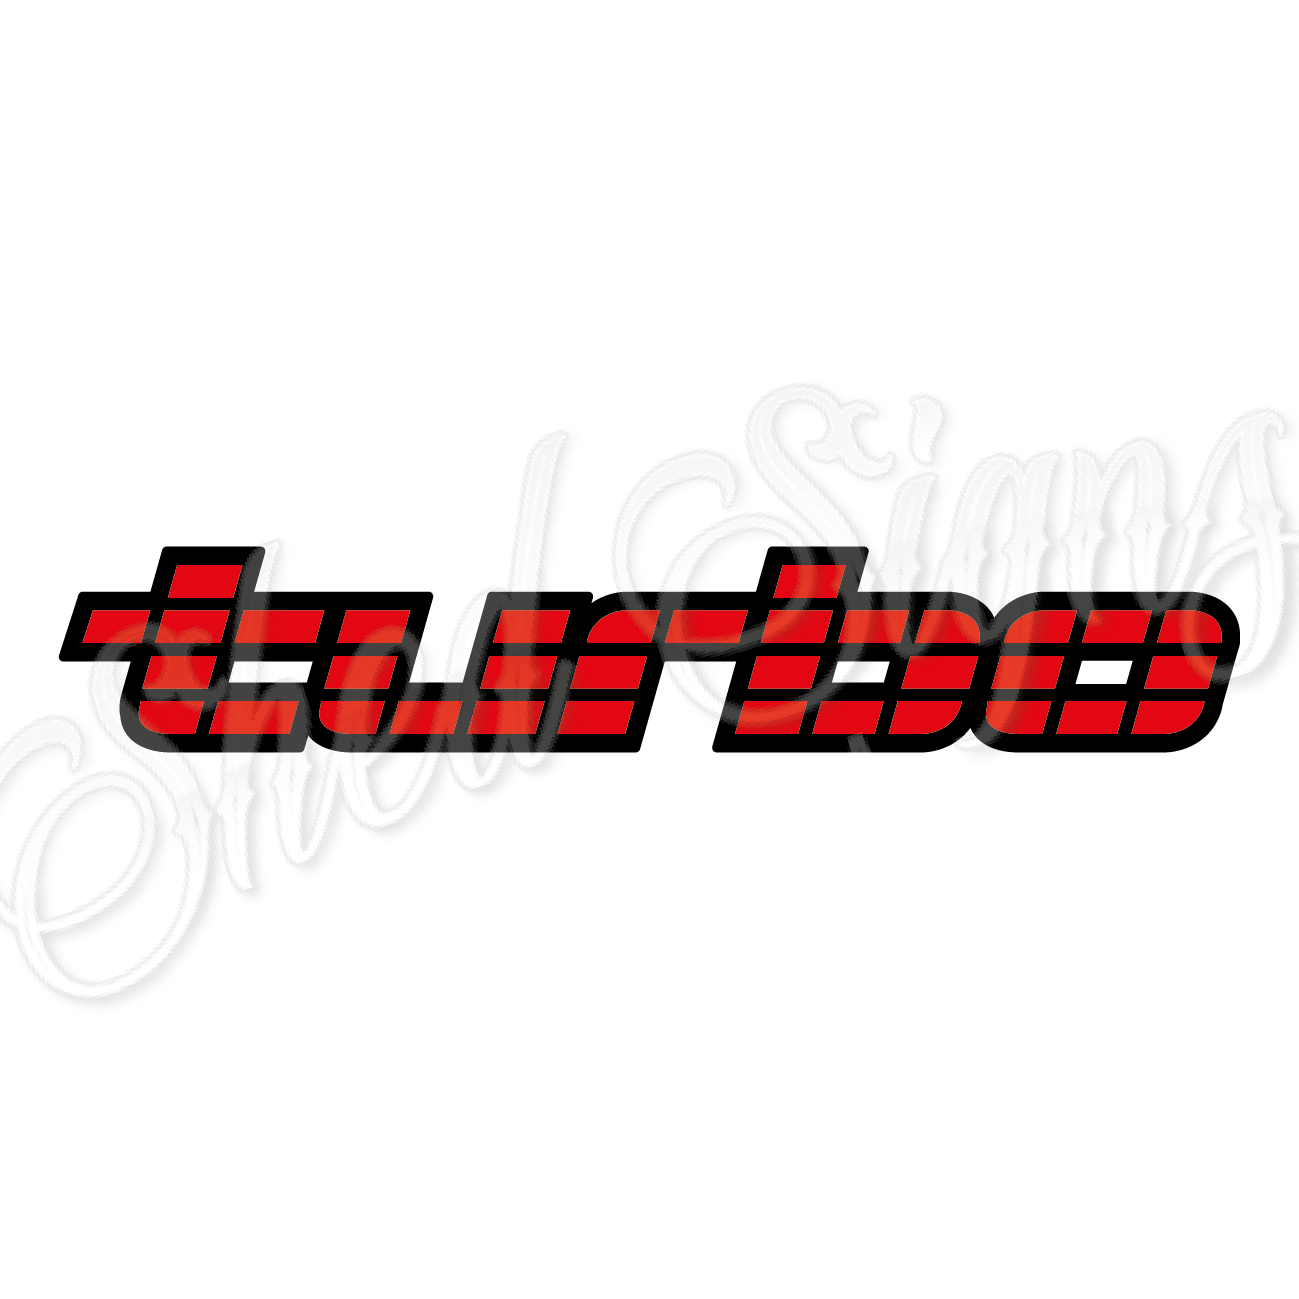 Holden VL Turbo- 3D Acrylic Laser Cut Sign.